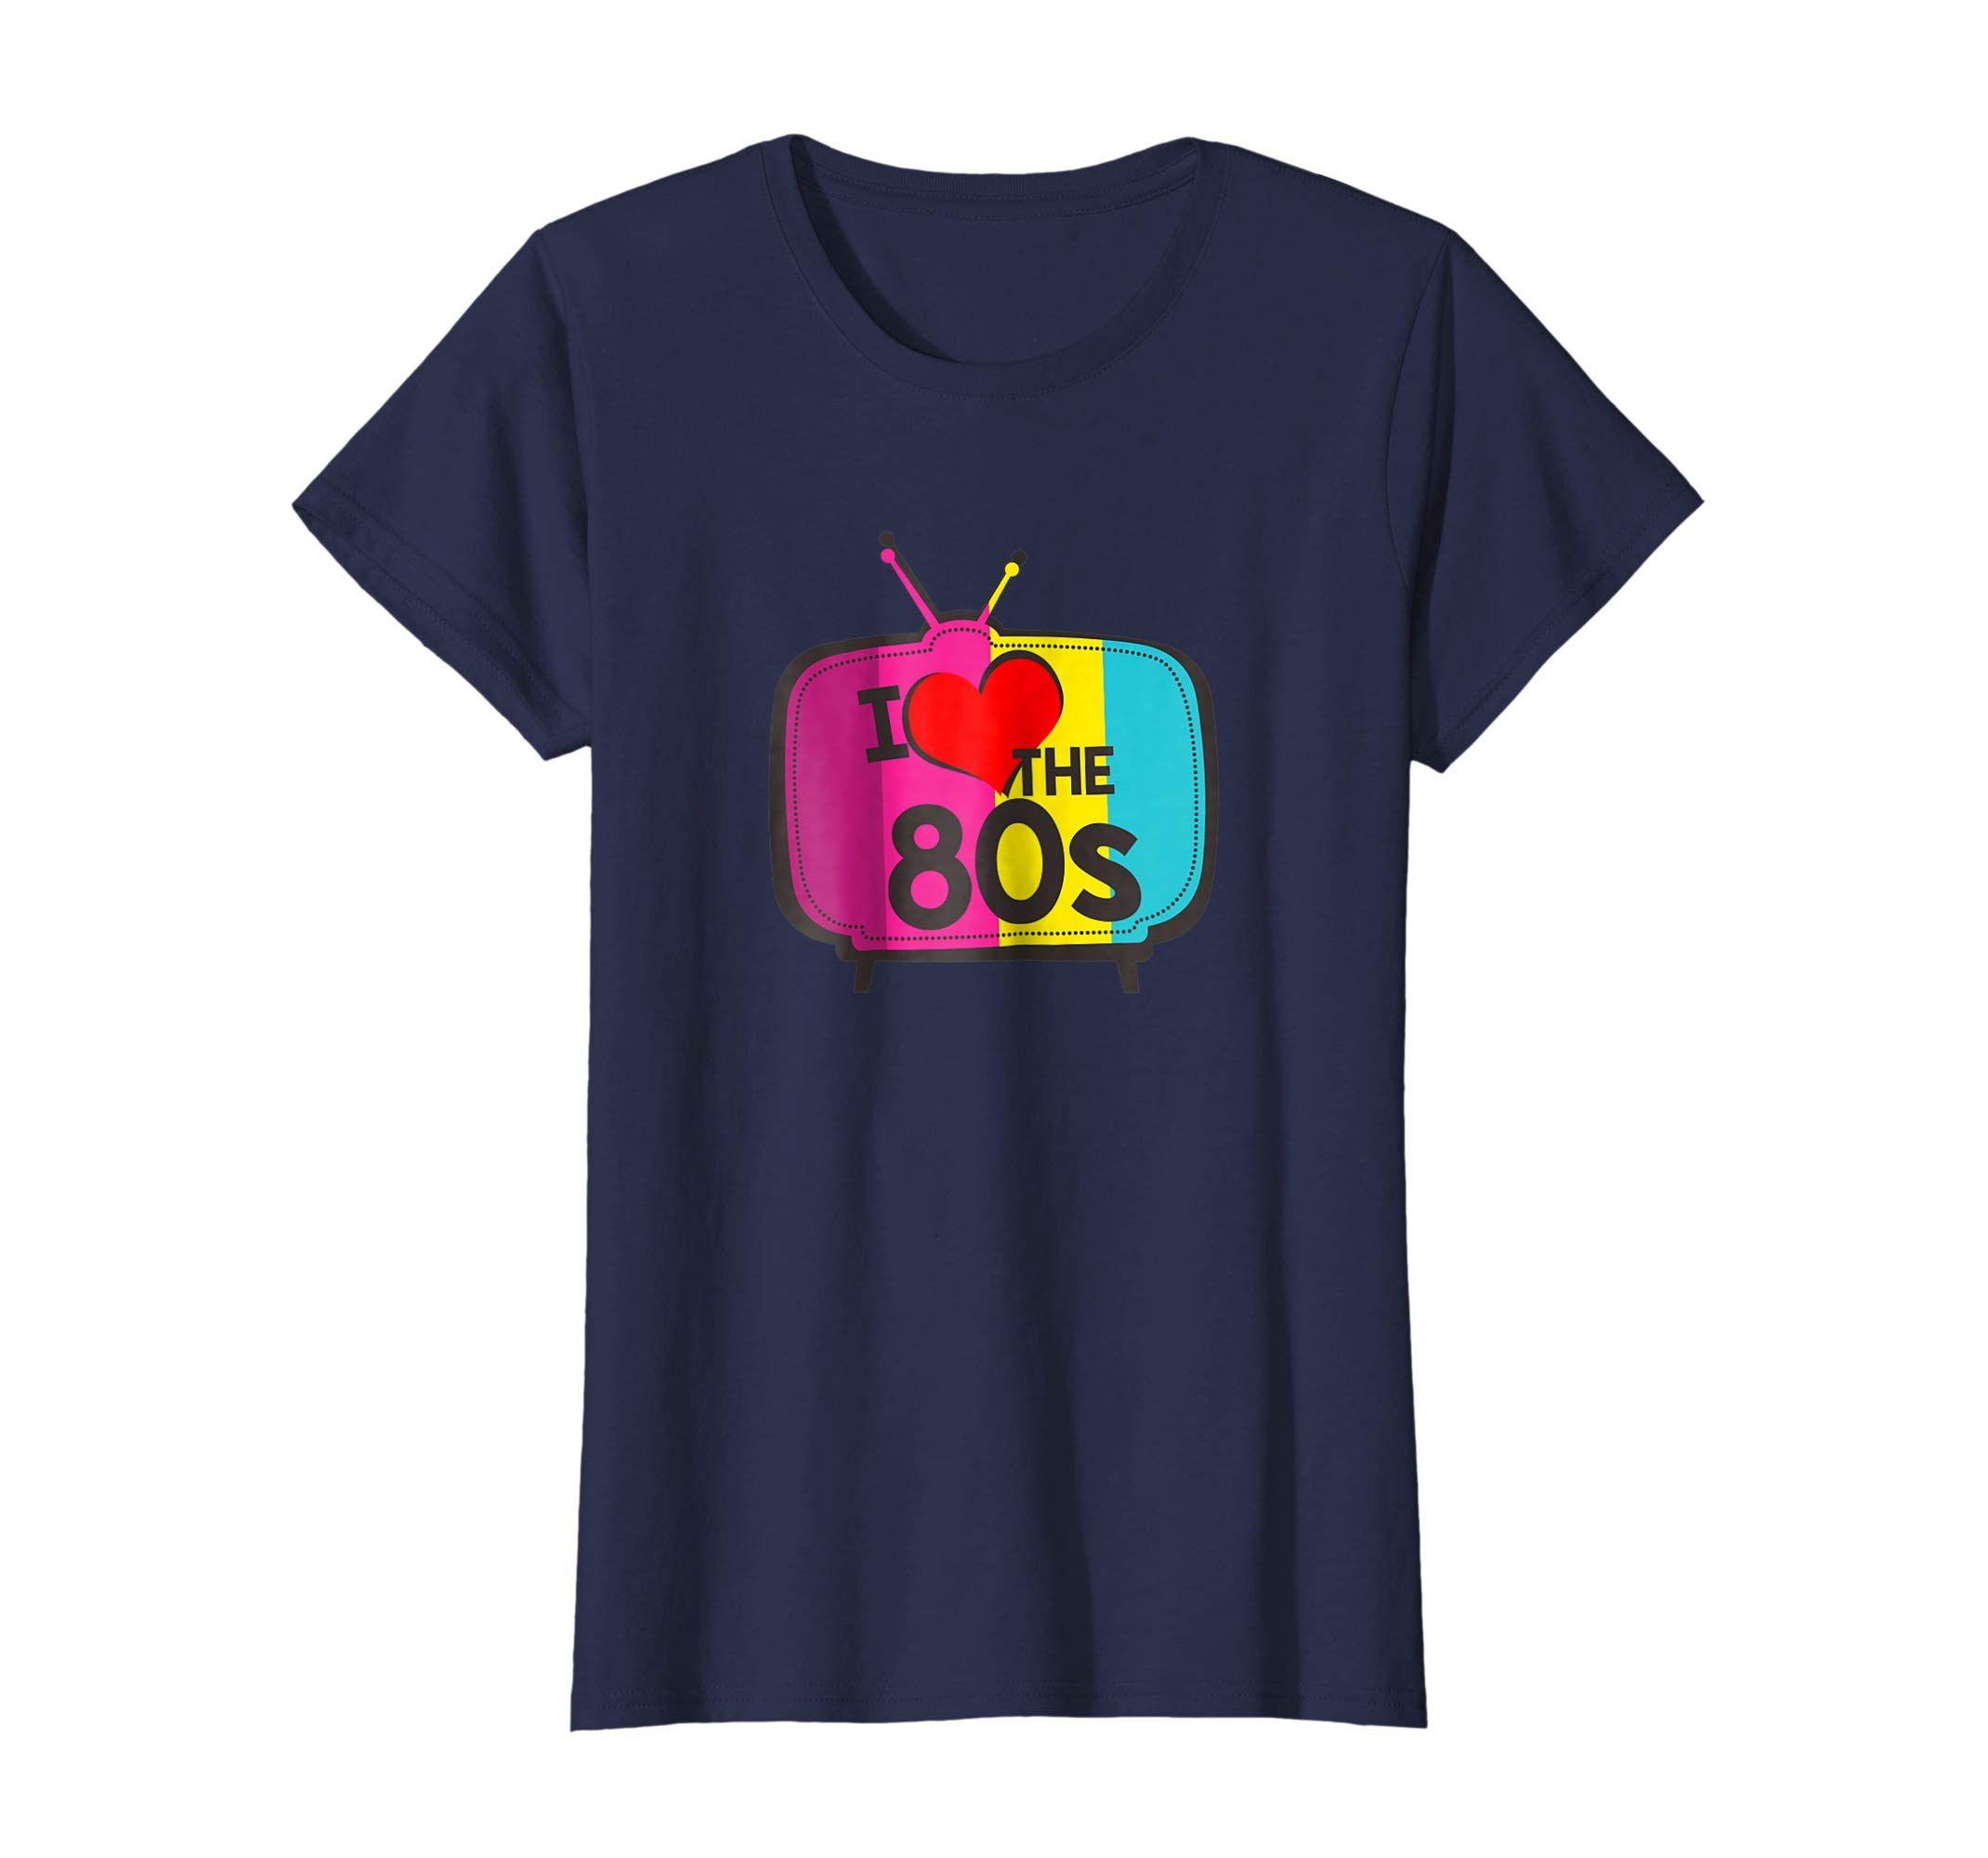 80s Fashion and Apparel Logo - Amazon.com: I love 80s 90S Tv Workout Gear T-Shirt Men Women Apparel ...